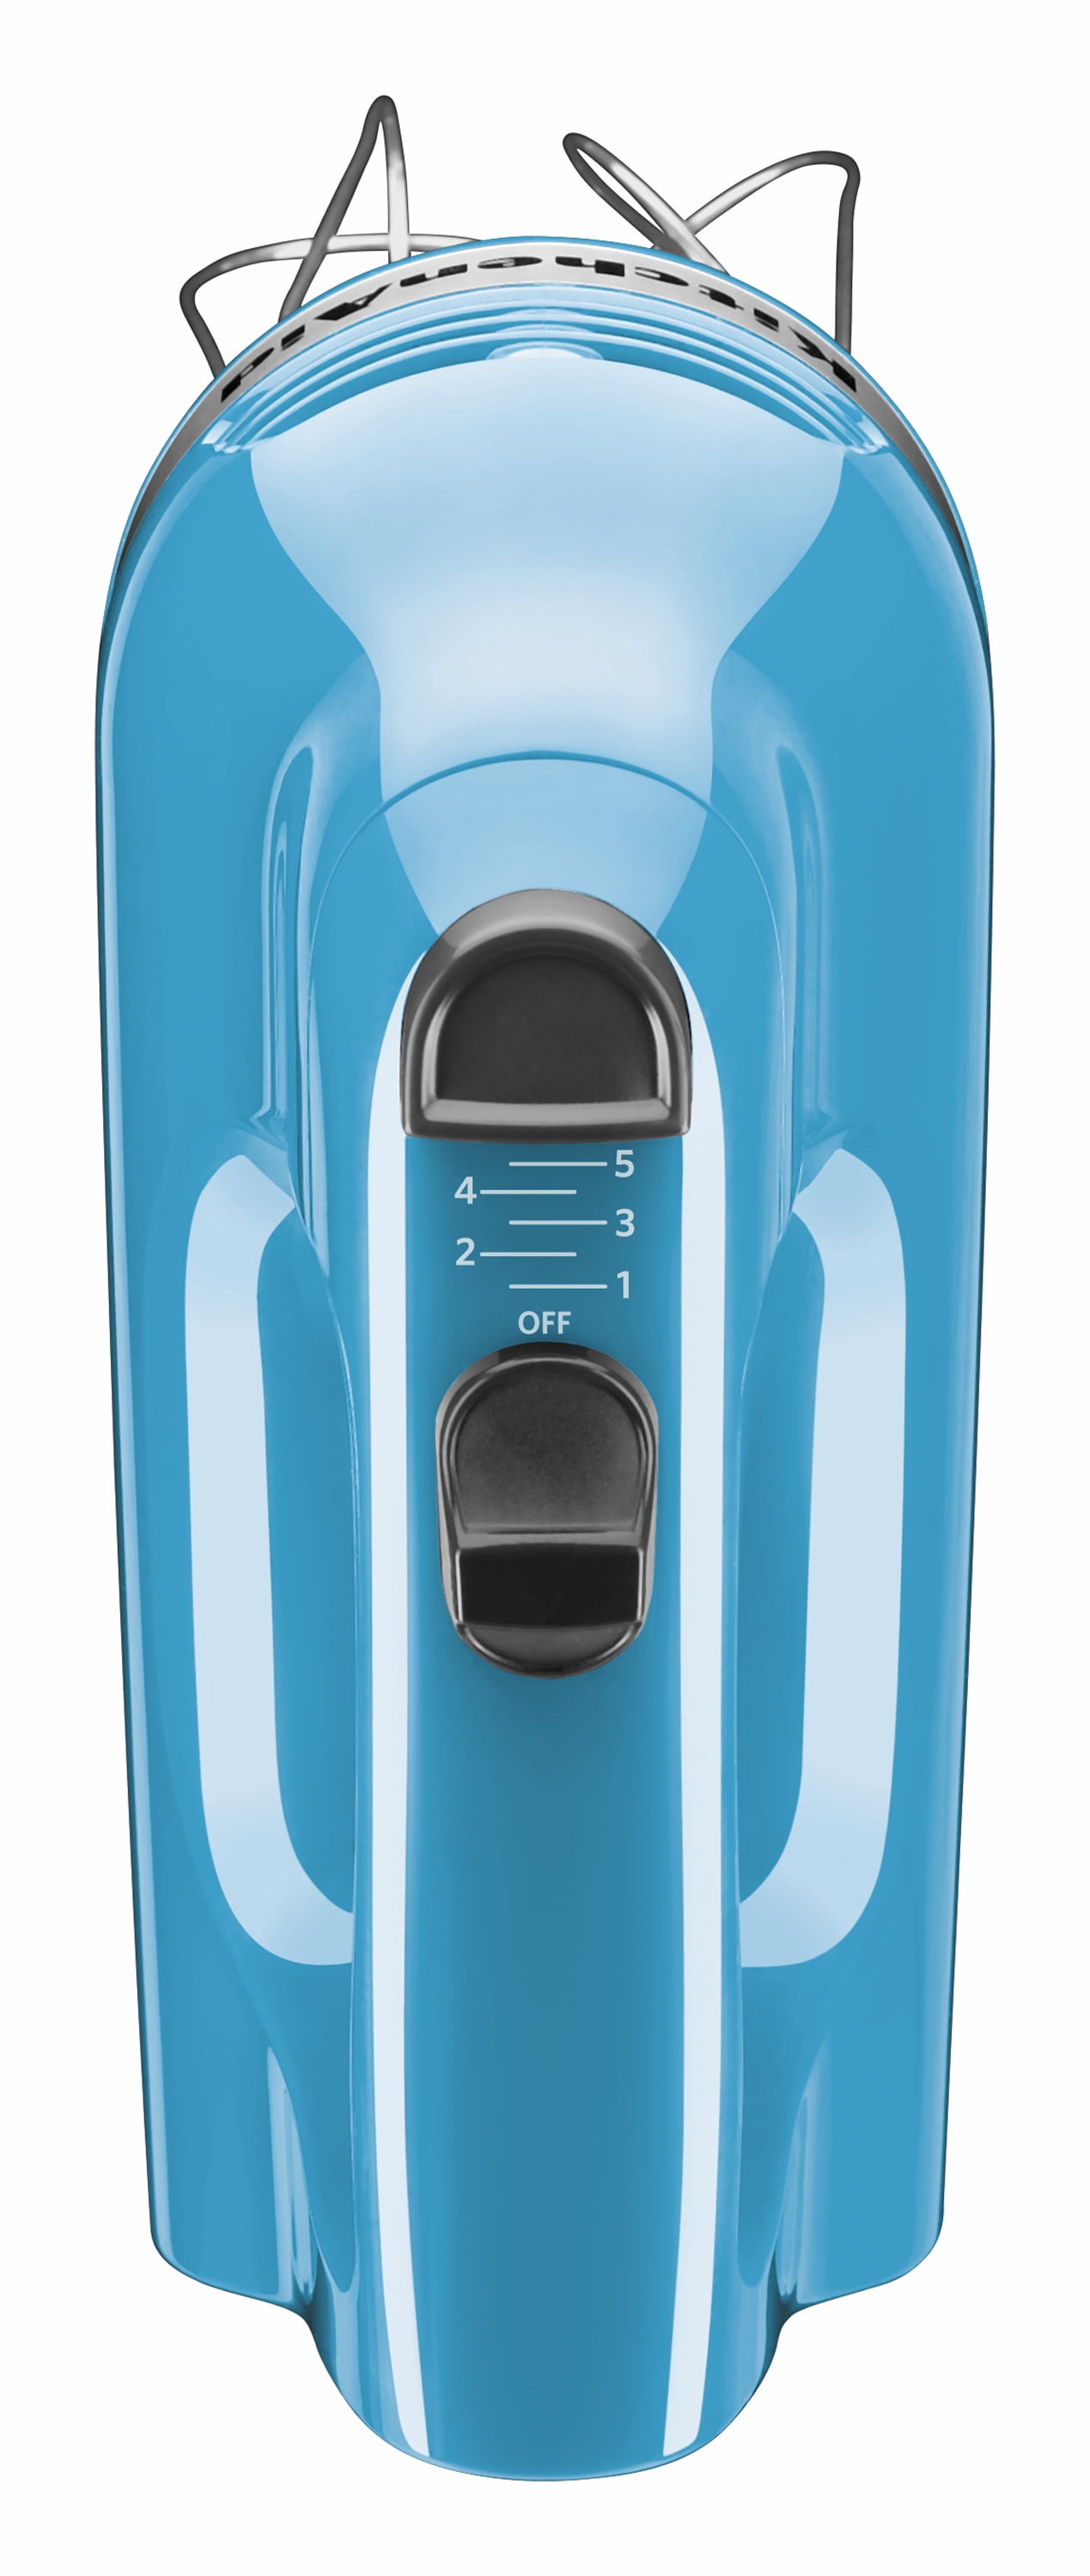 KitchenAid RKHM5IC 5-Speed Ultra Power Hand Mixer - Ice Blue for